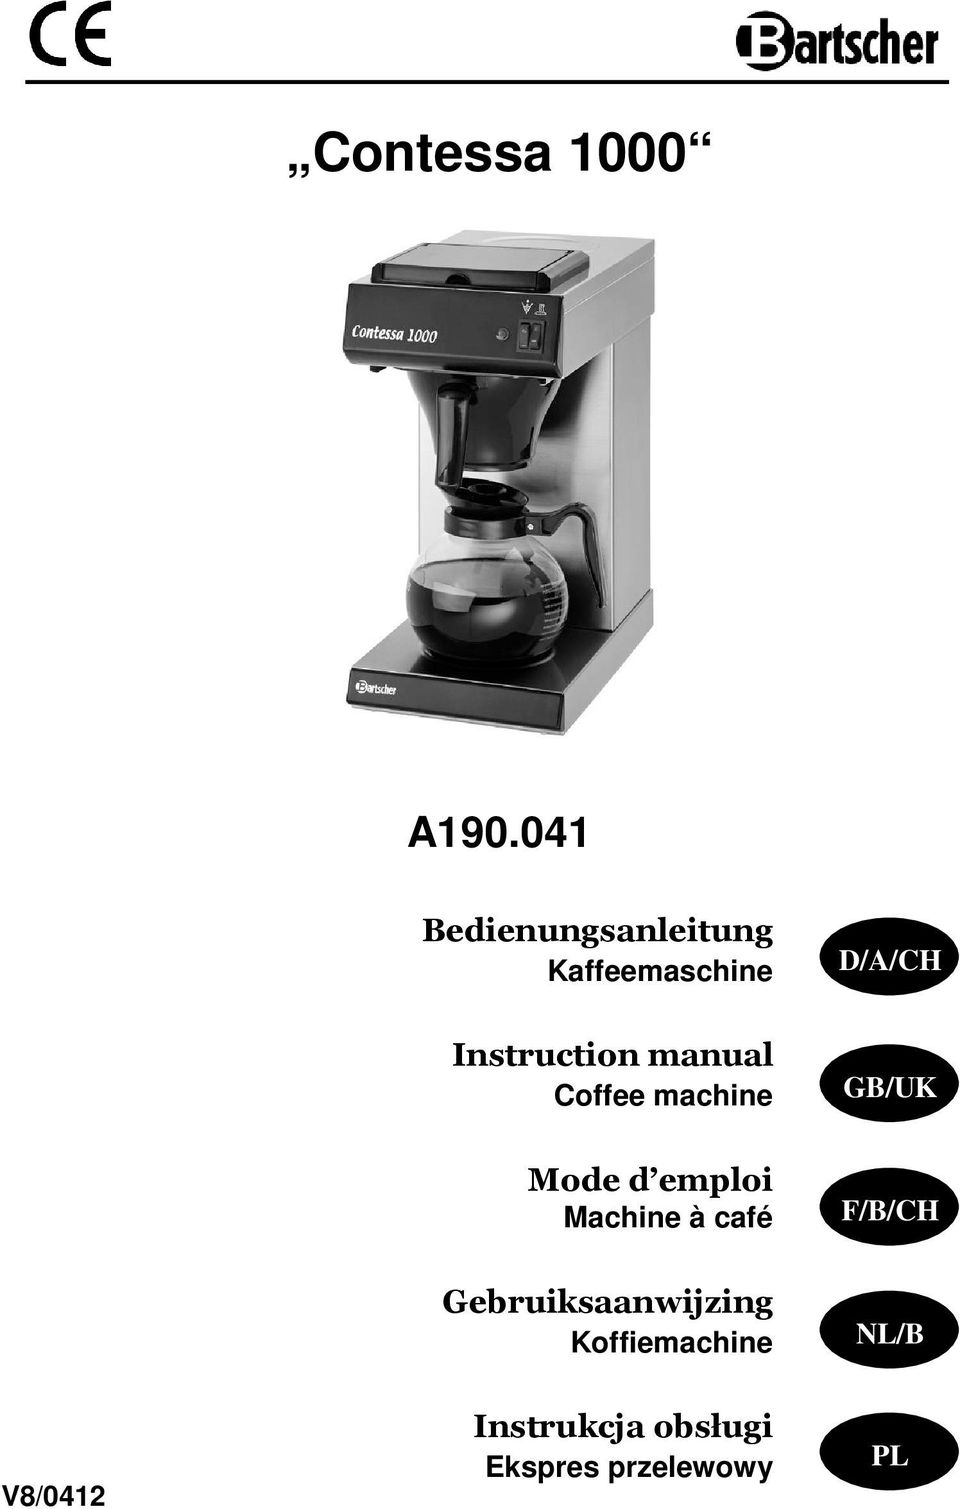 Instructin manual Cffee machine GB/UK Mde d empli